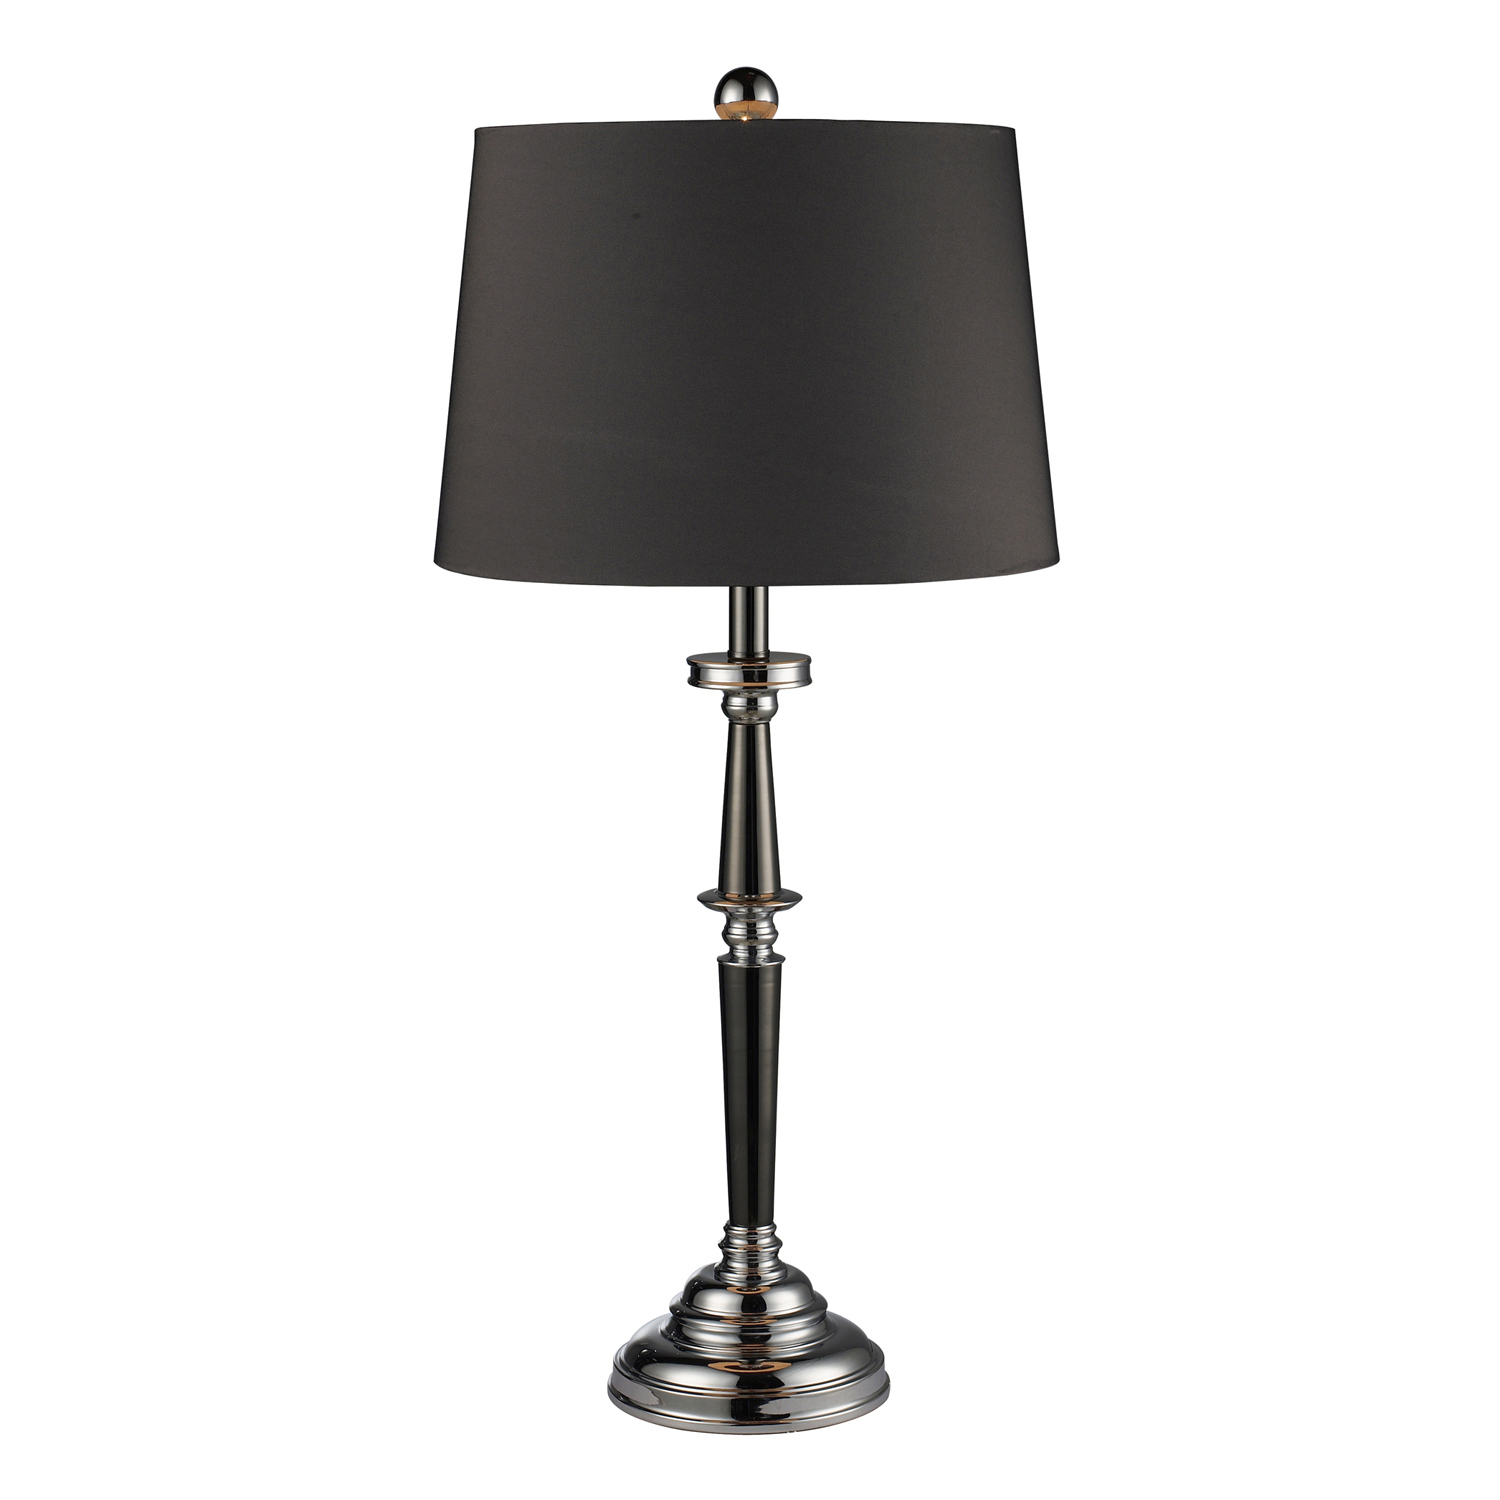 Elk Lighting D1406 Monaca Table Lamp - Black Nickel and Chrome